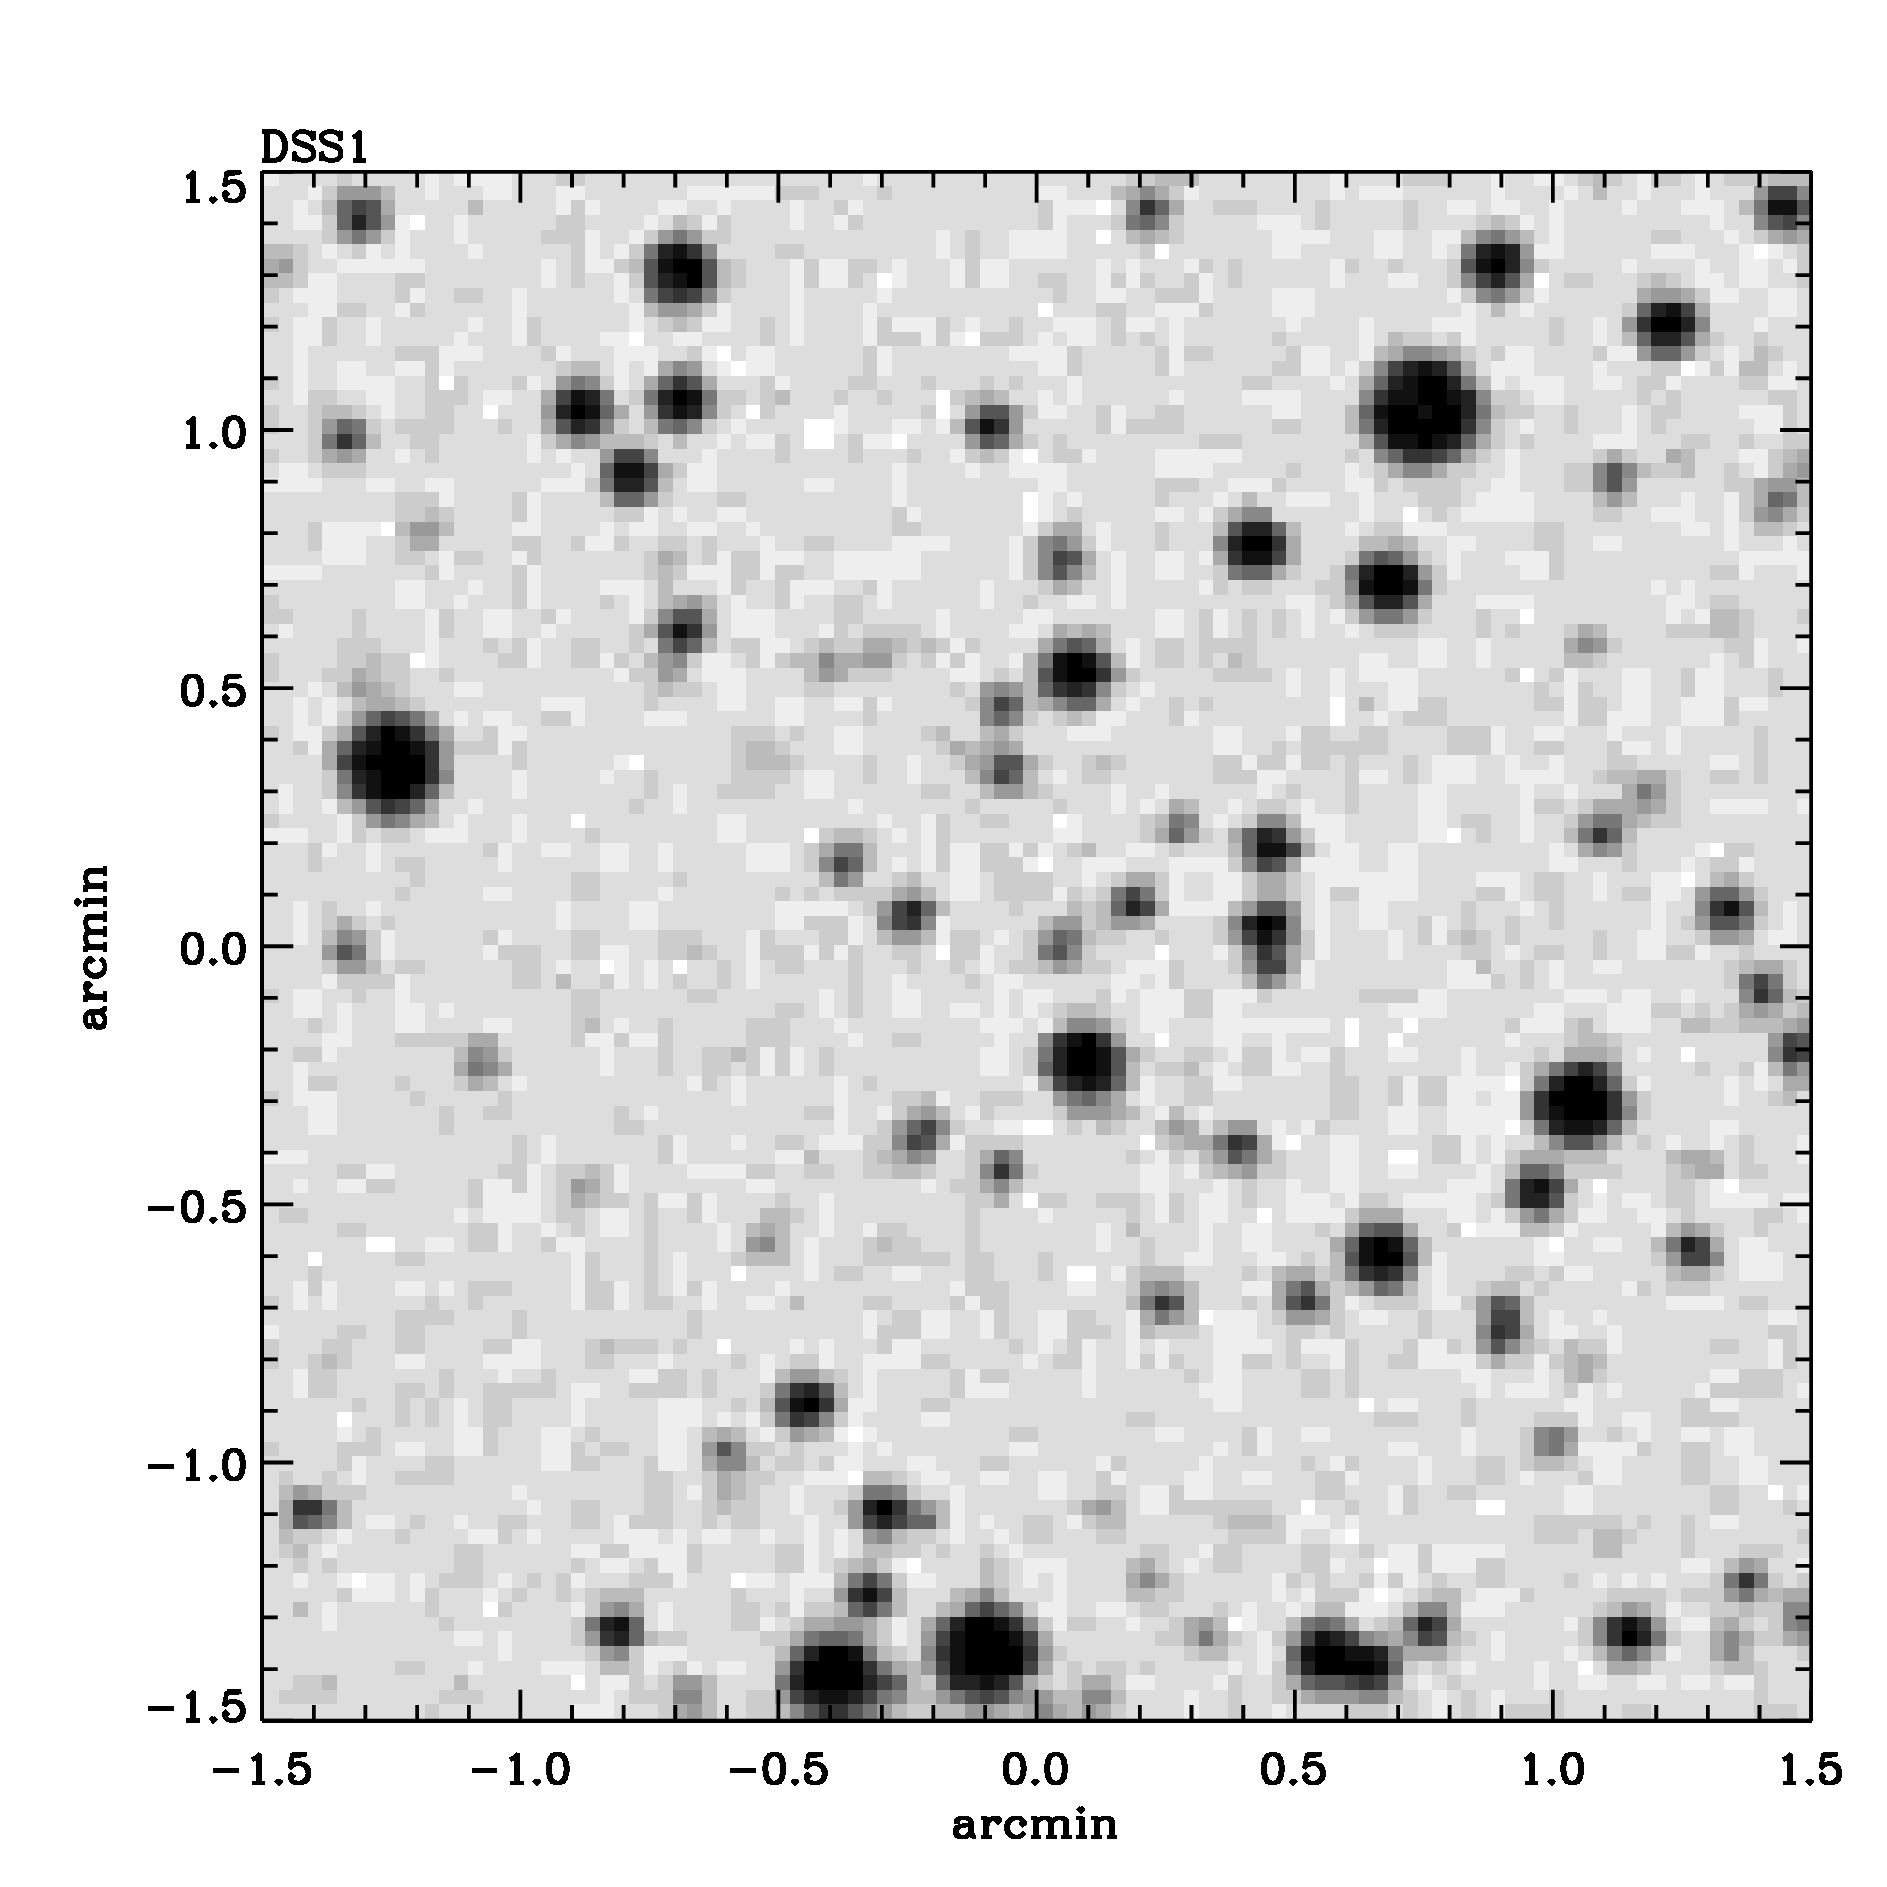 Optical image for SWIFT J0723.8-0804